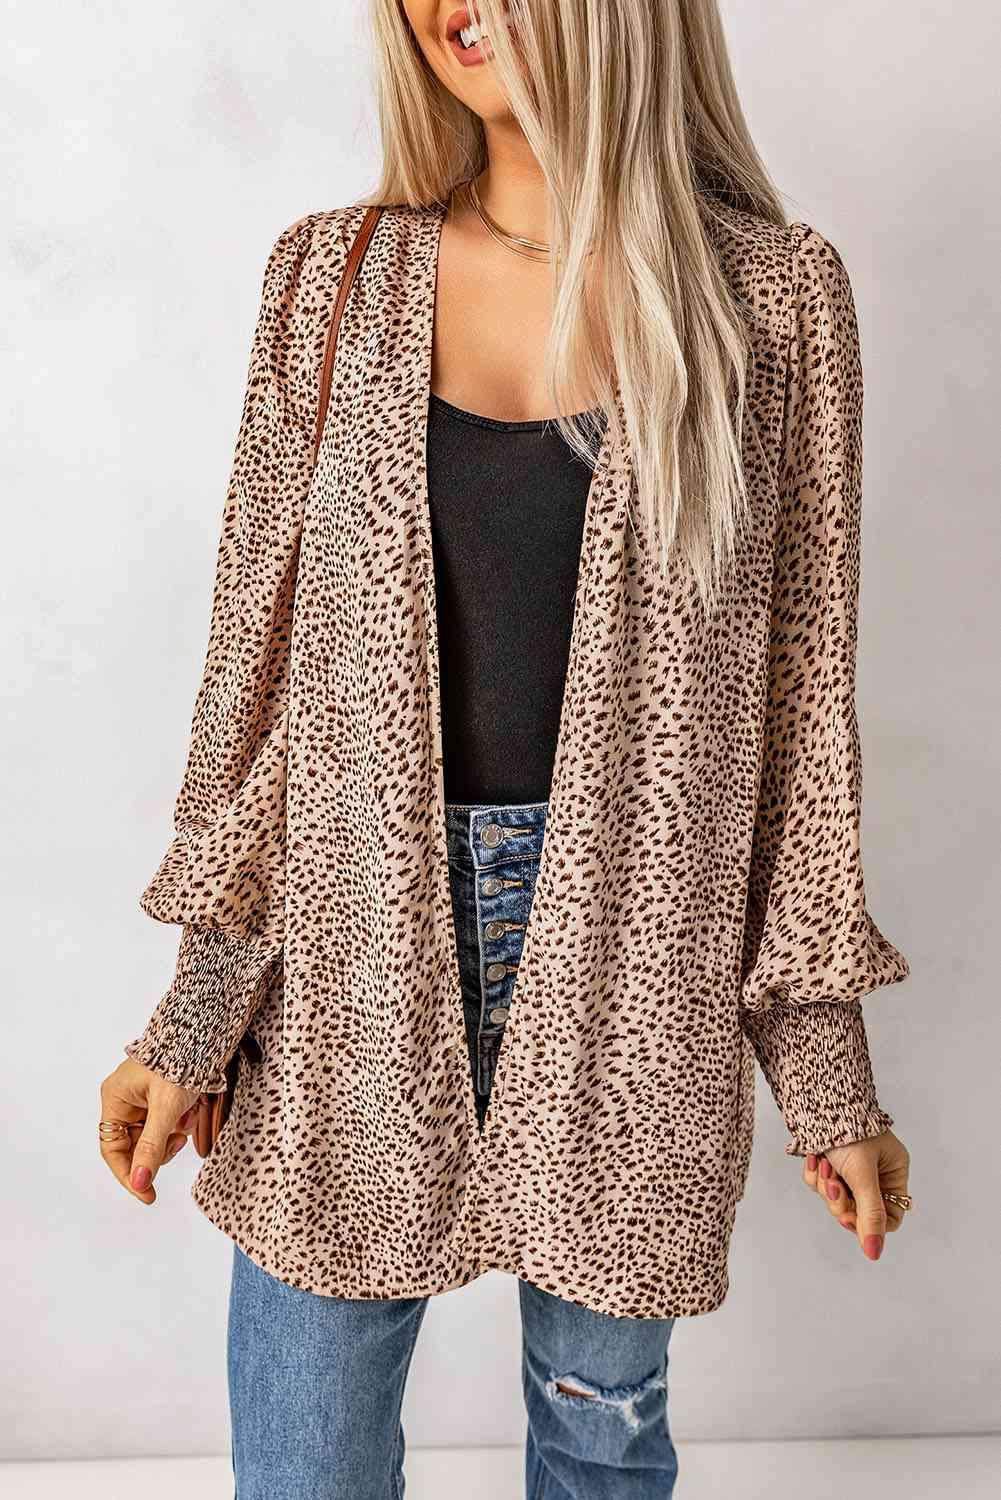 a woman wearing a leopard print jacket